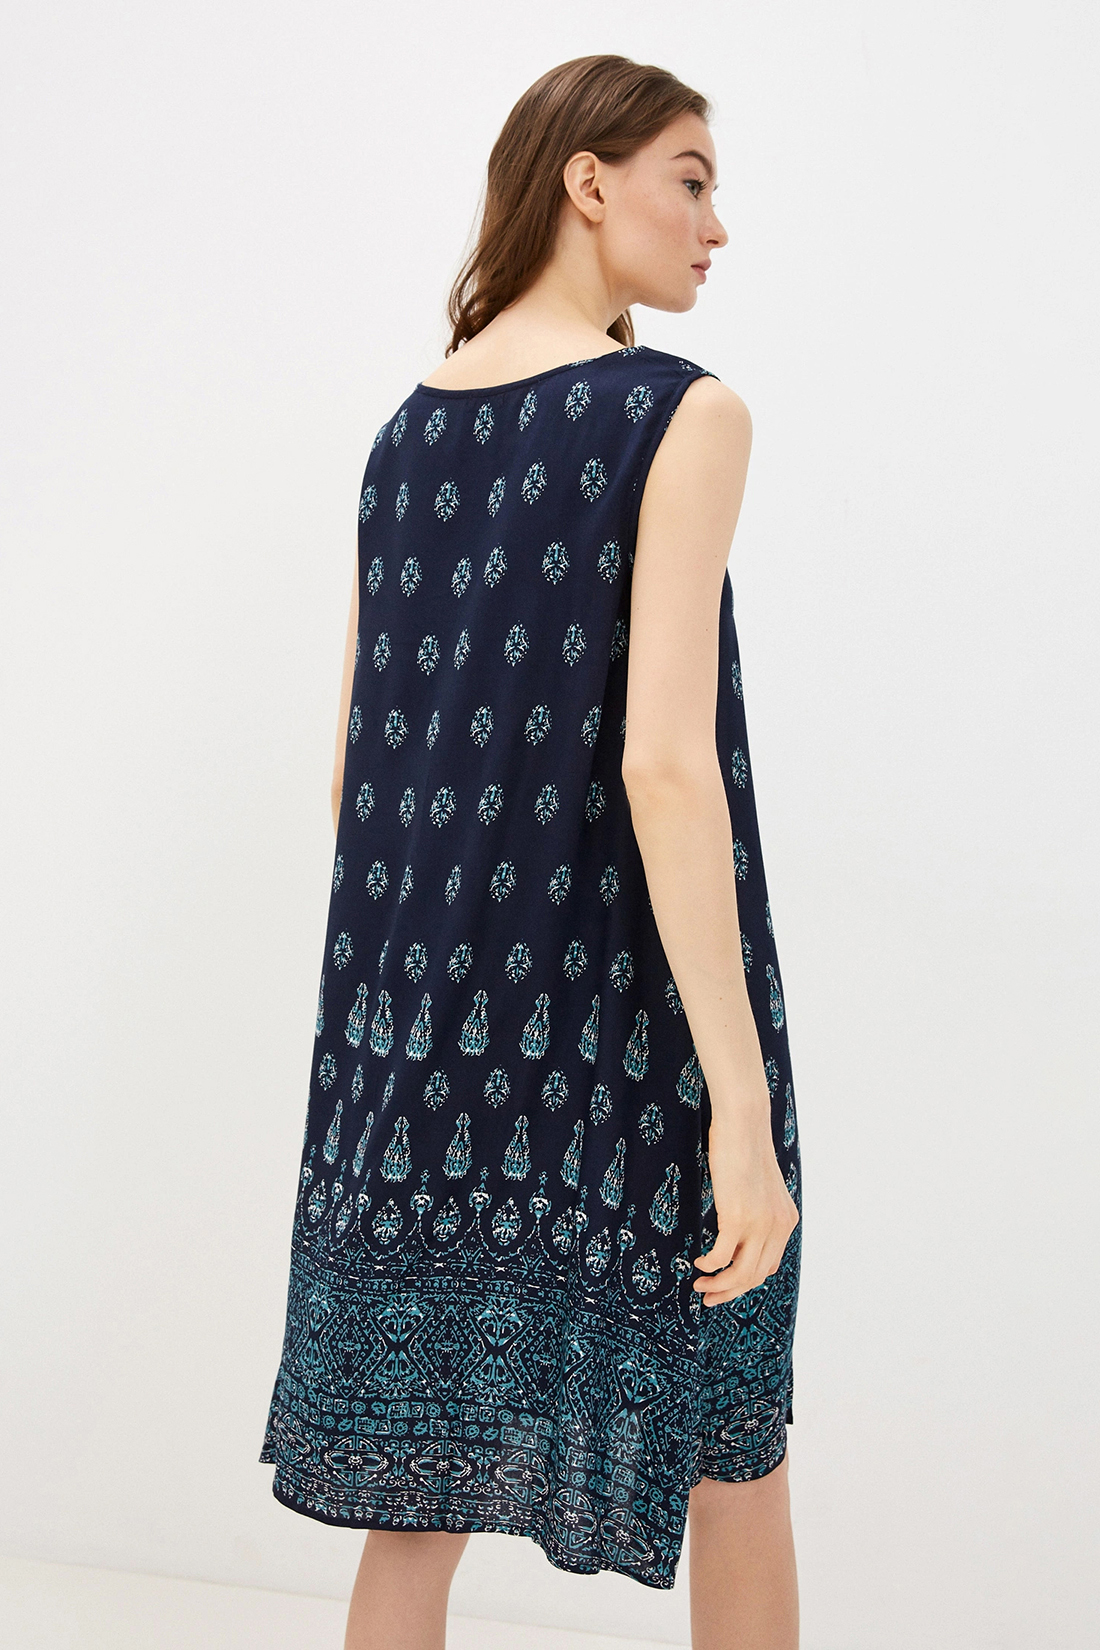 Платье (арт. baon B451093), размер XS, цвет dark navy printed#синий Платье (арт. baon B451093) - фото 2